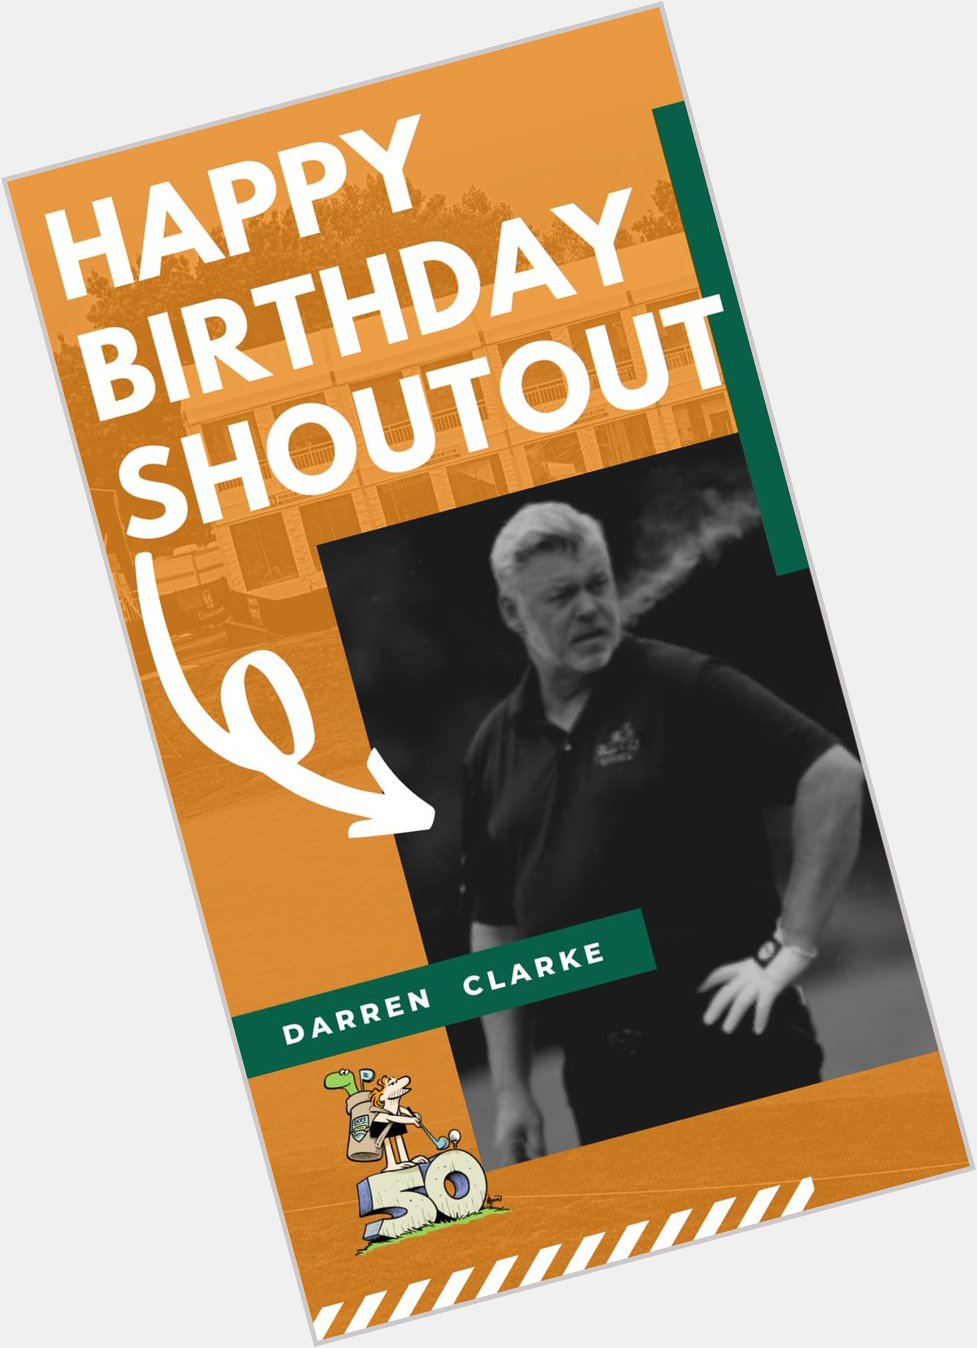 Happy Birthday to Darren Clarke! 